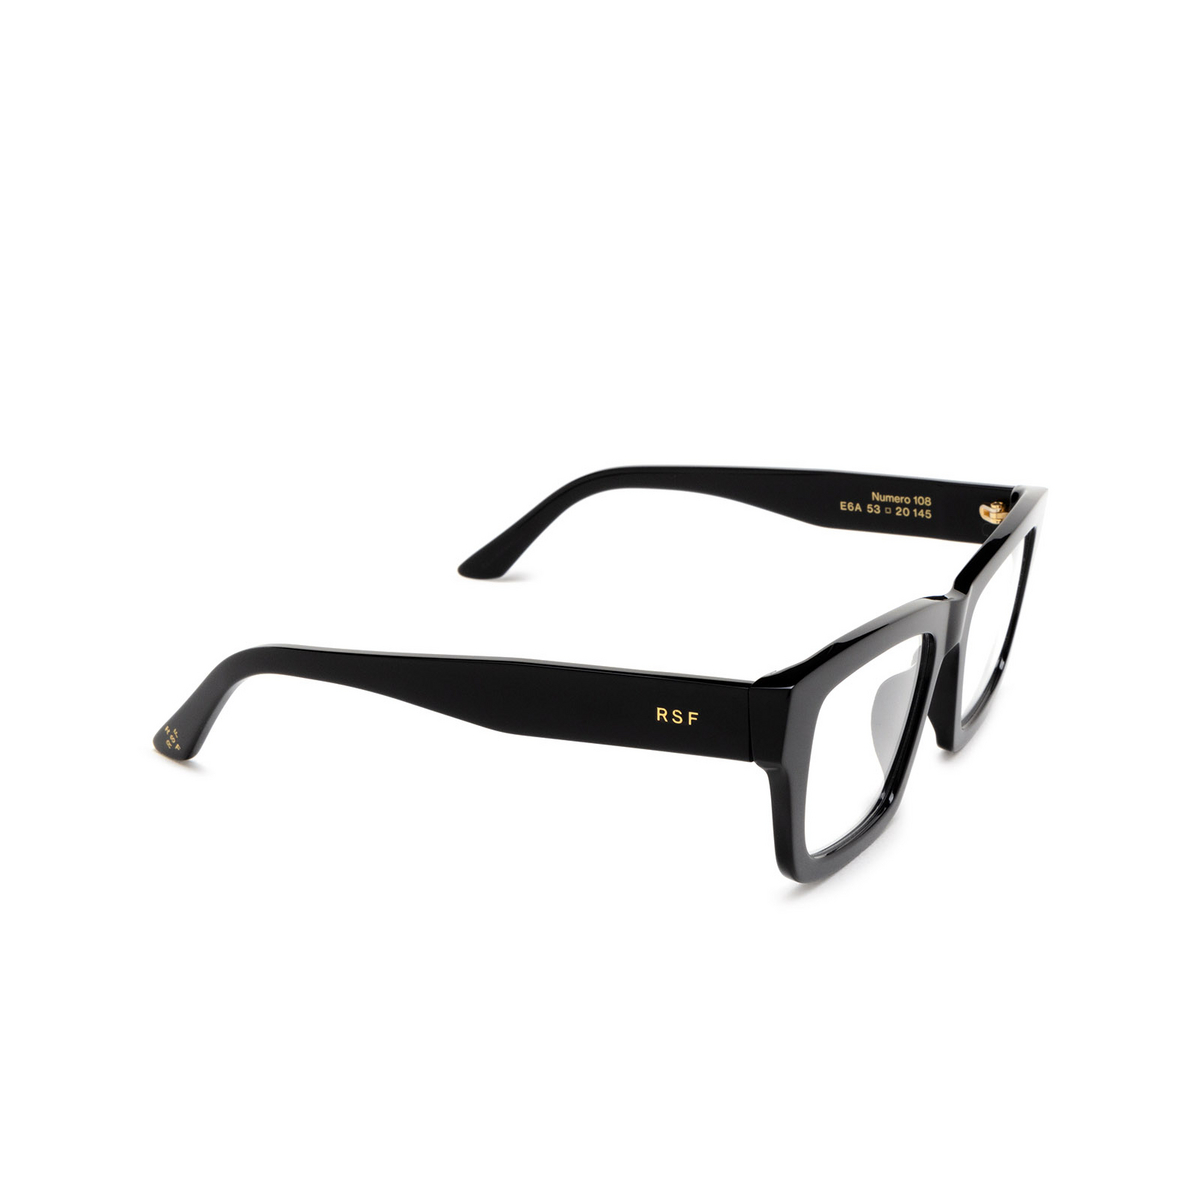 Retrosuperfuture NUMERO 108 Eyeglasses E6A Black - three-quarters view